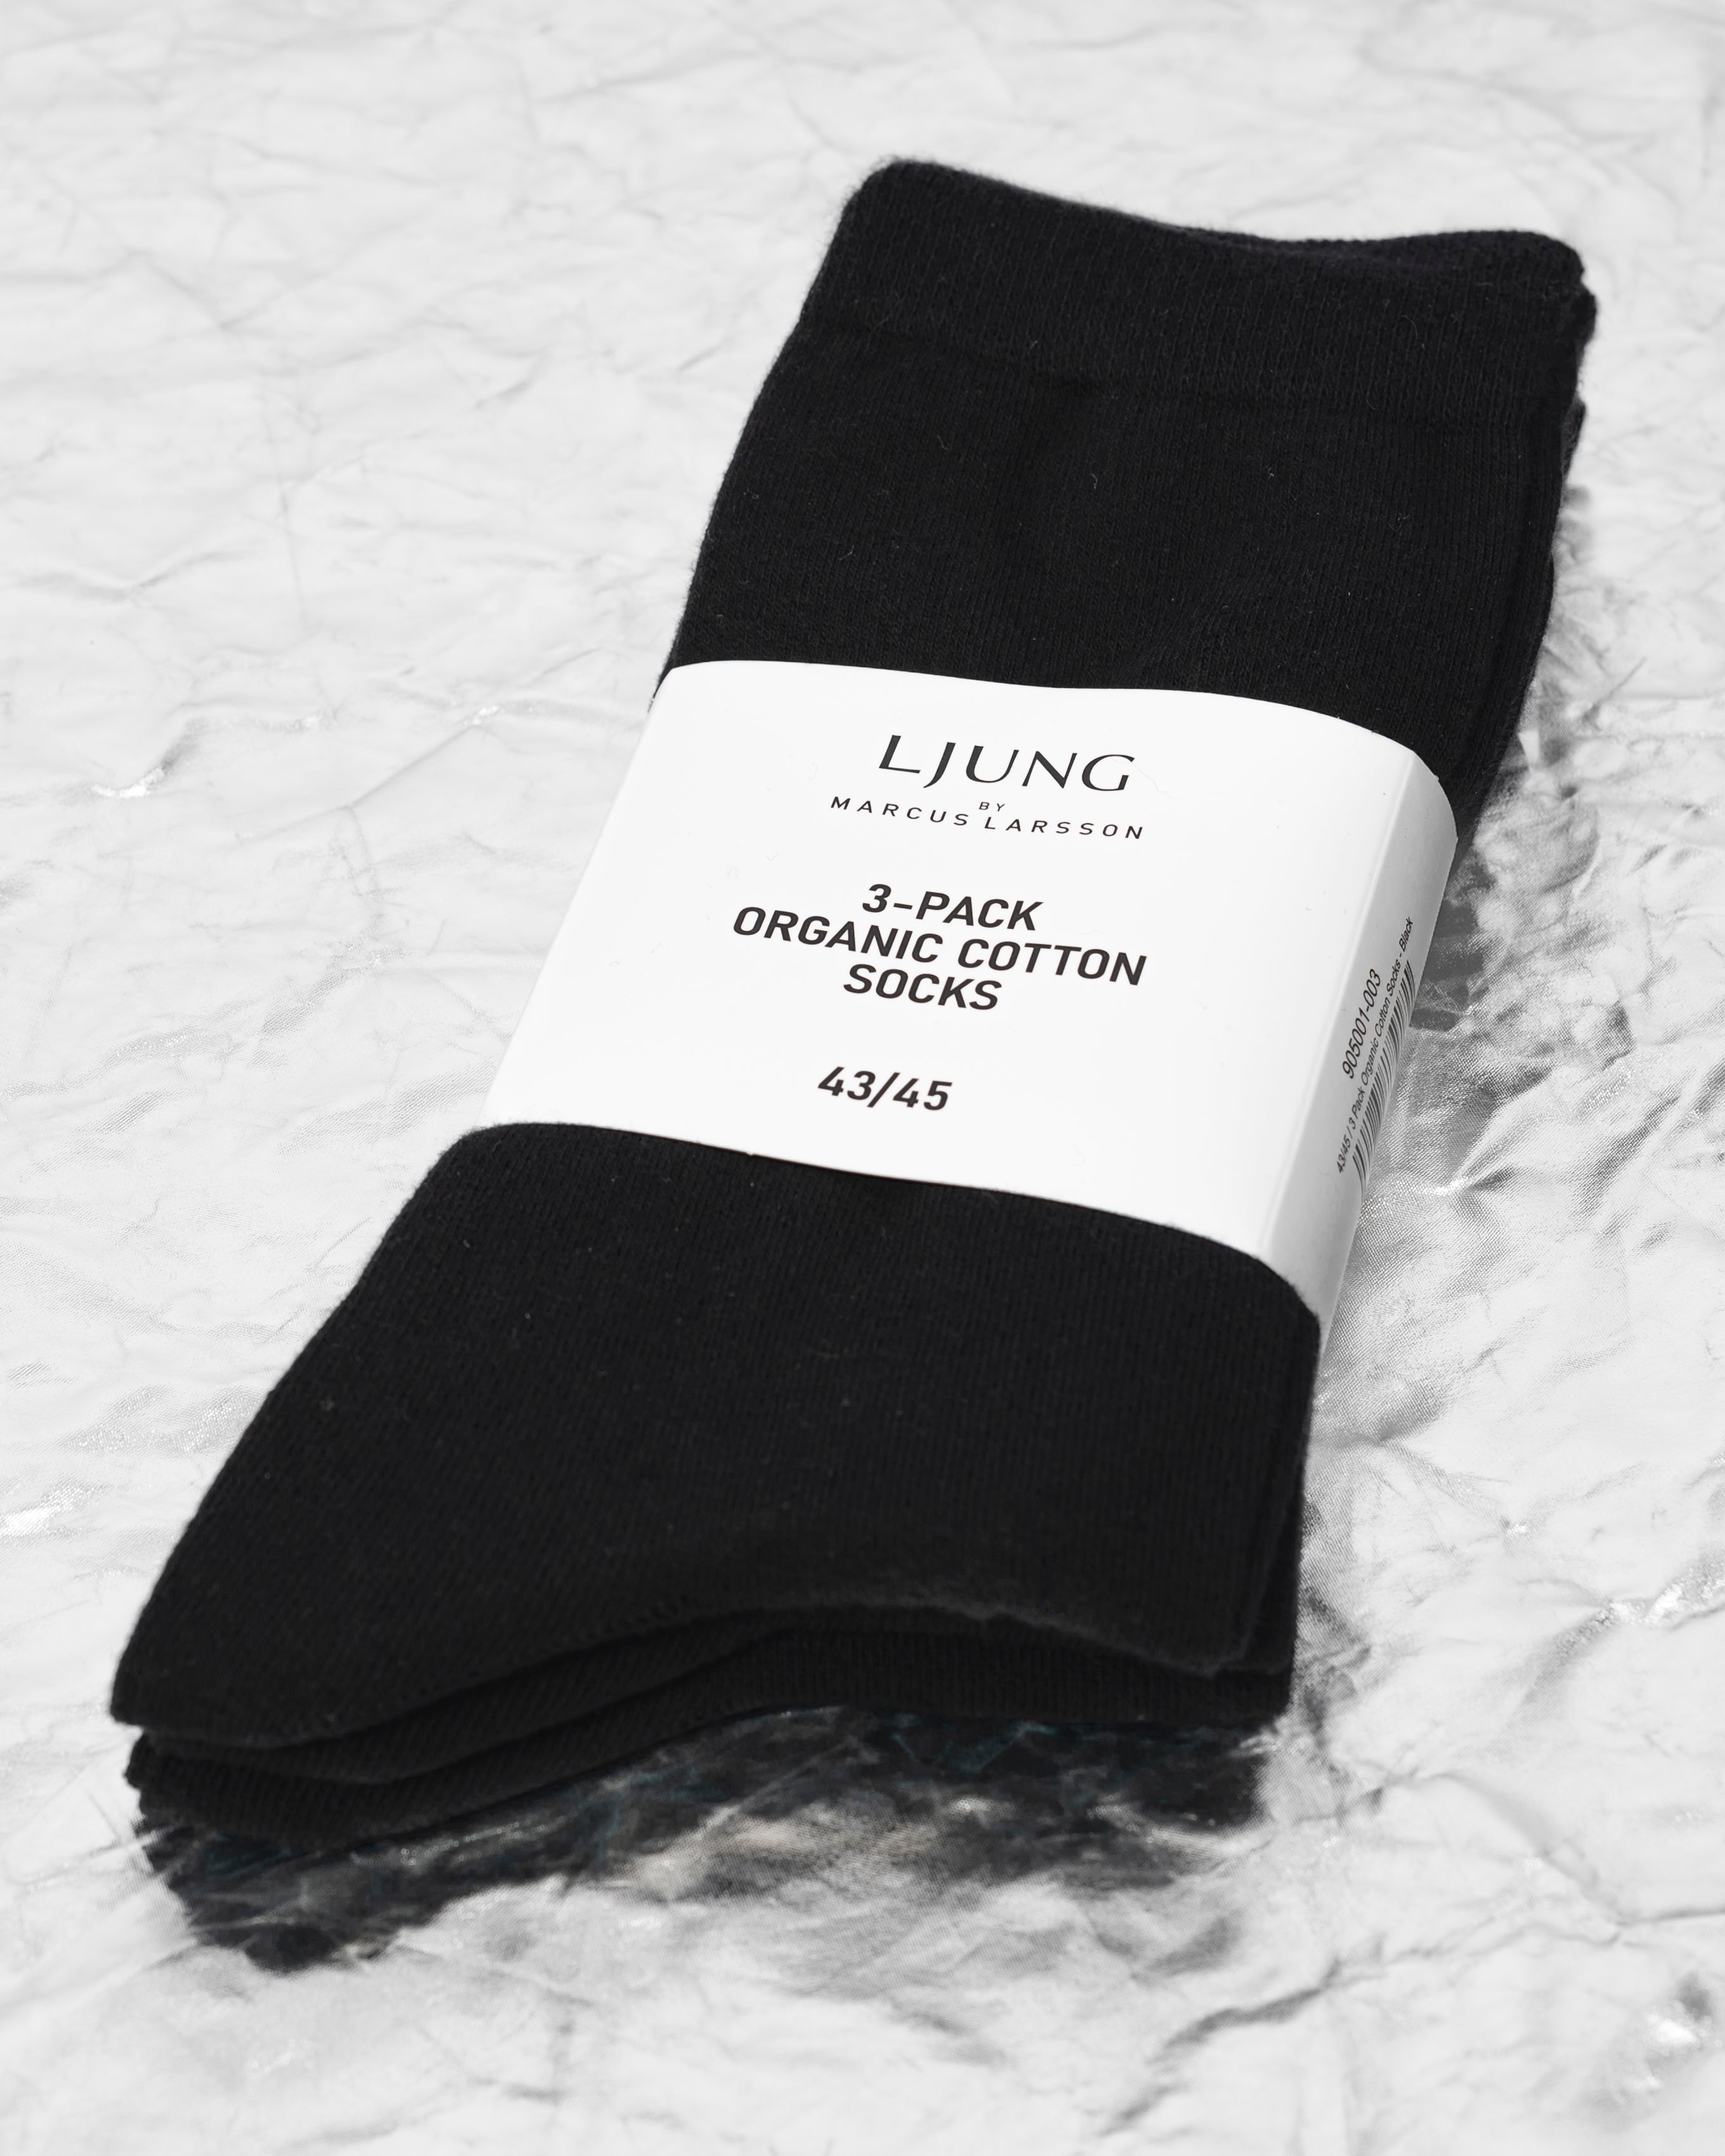 3 Pack Organic Cotton Socks - Black-Ljung by Marcus Larsson